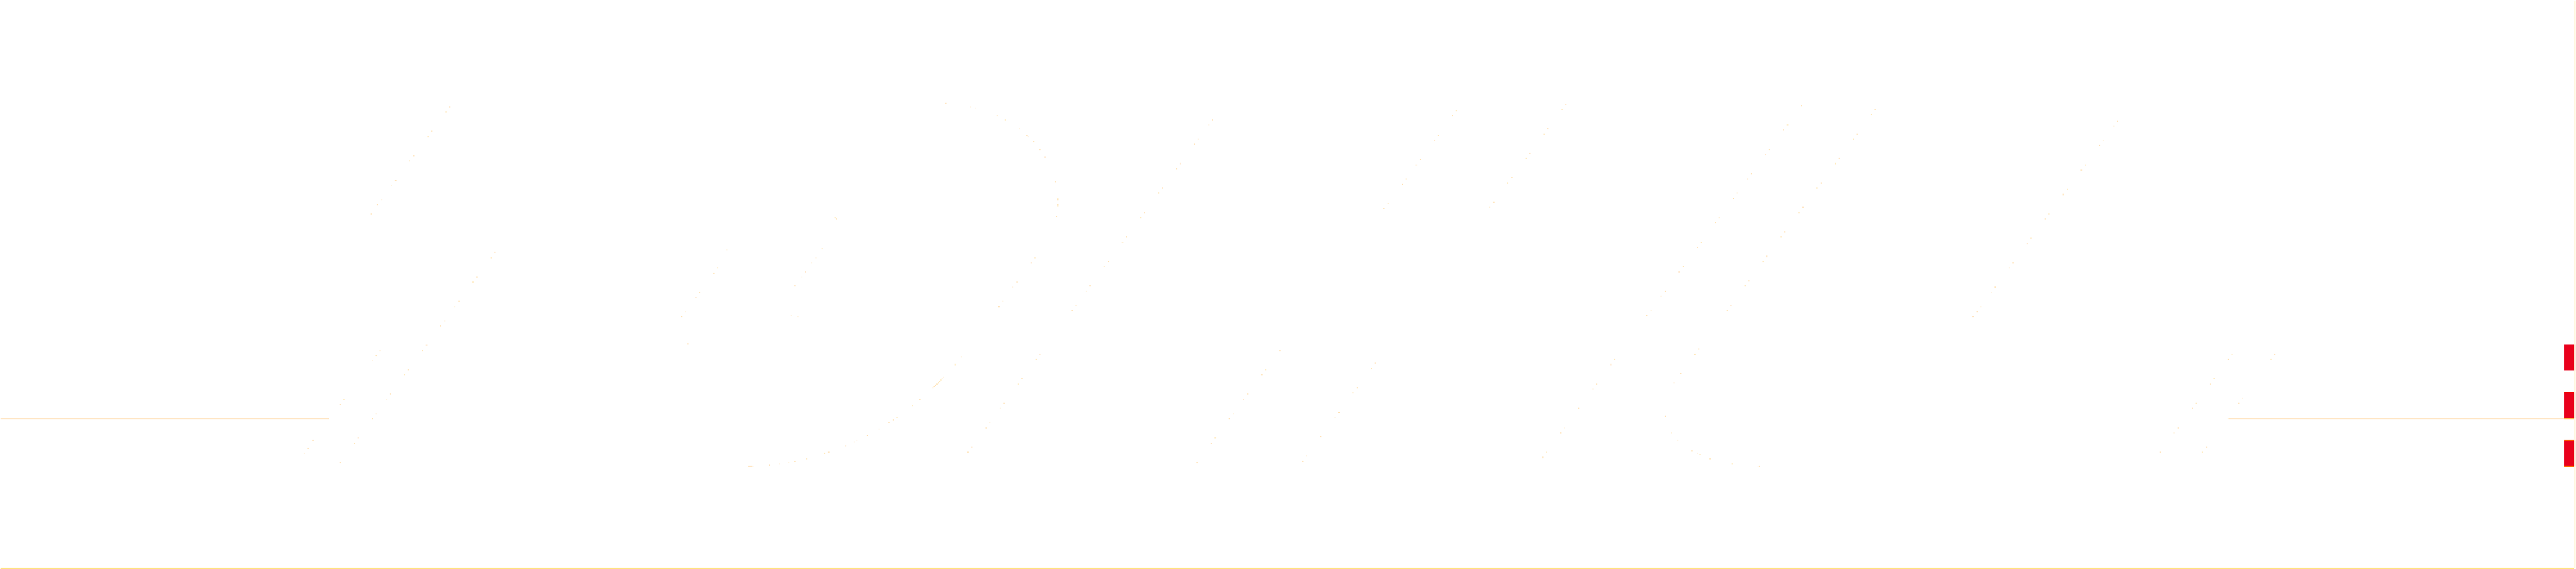 E1-logo-dhl-wit-1